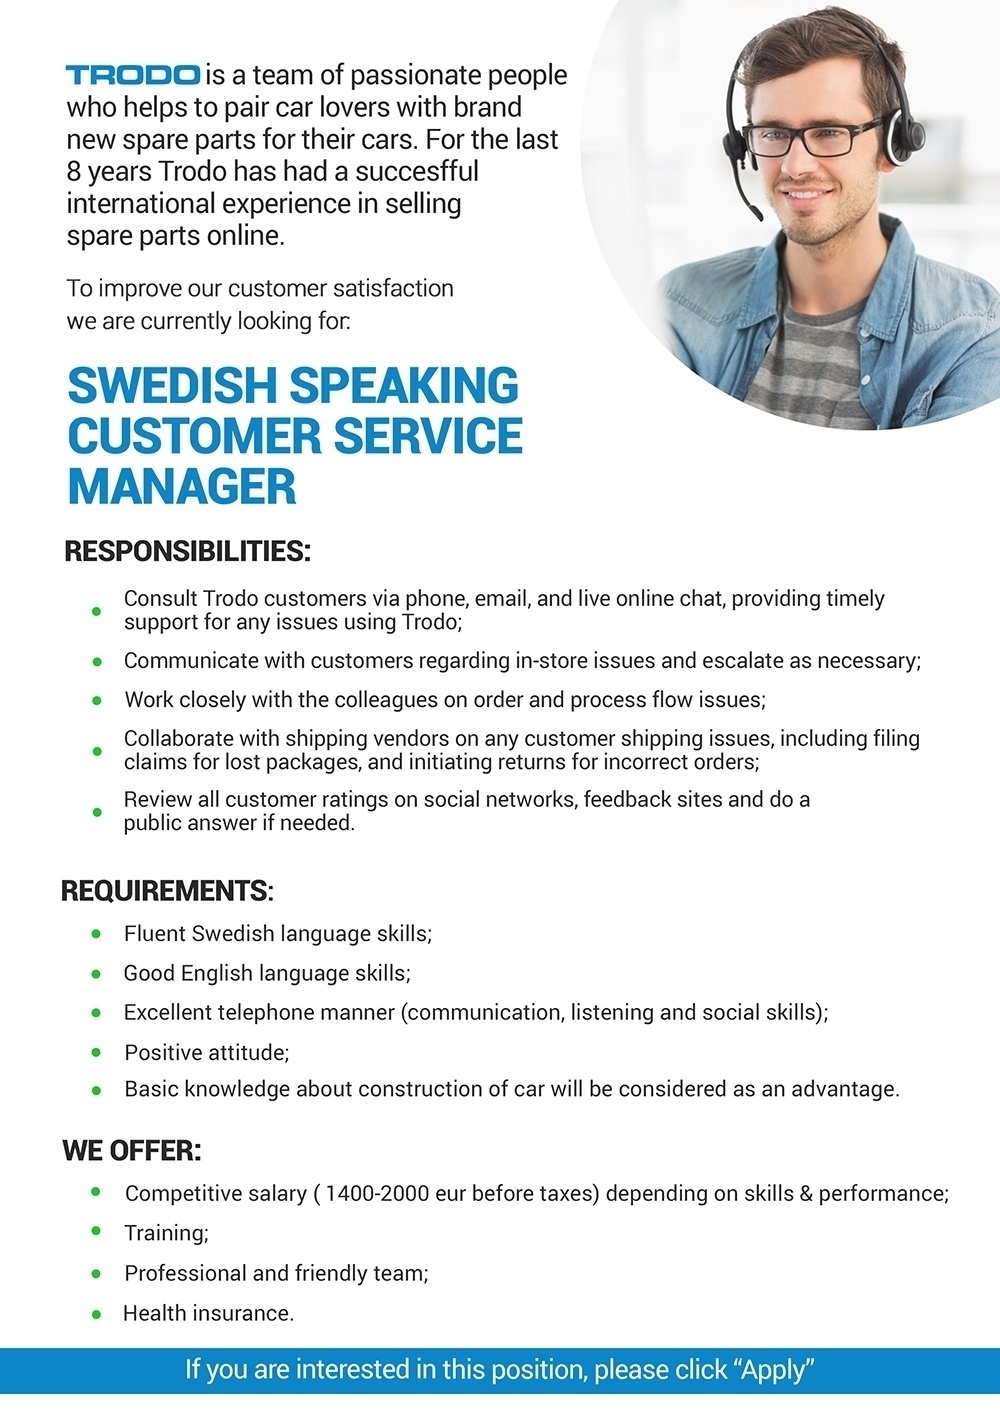 Trodo, SIA Swedish Speaking Customer Service Manager